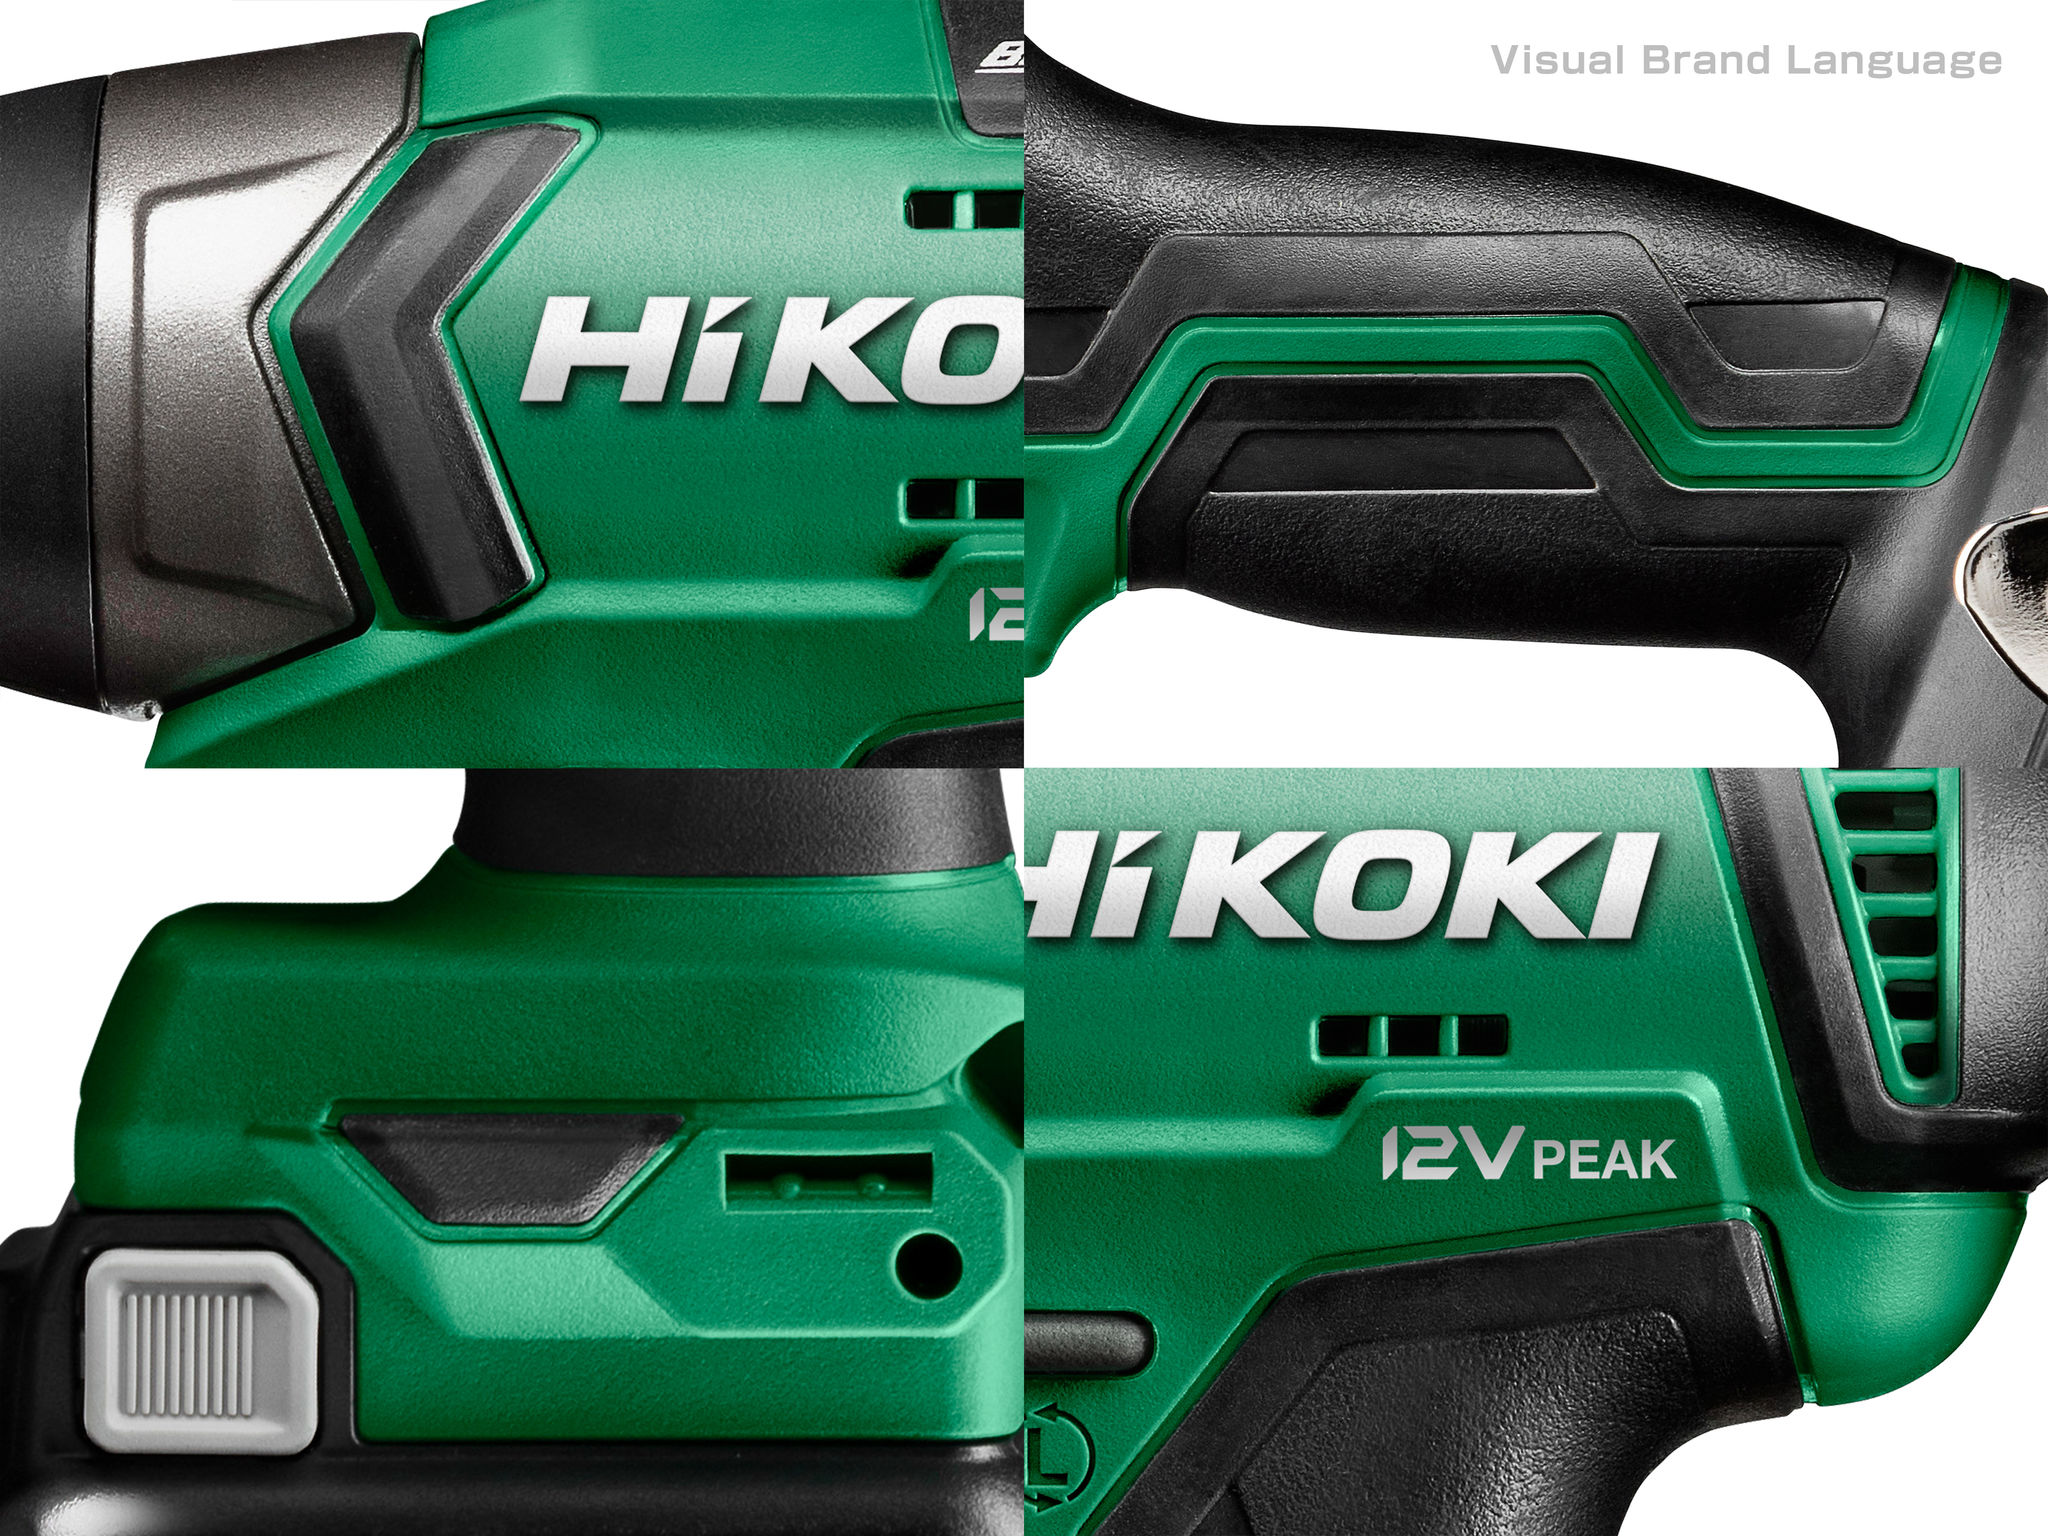 iF Design - Hikoki 12V Peak Series